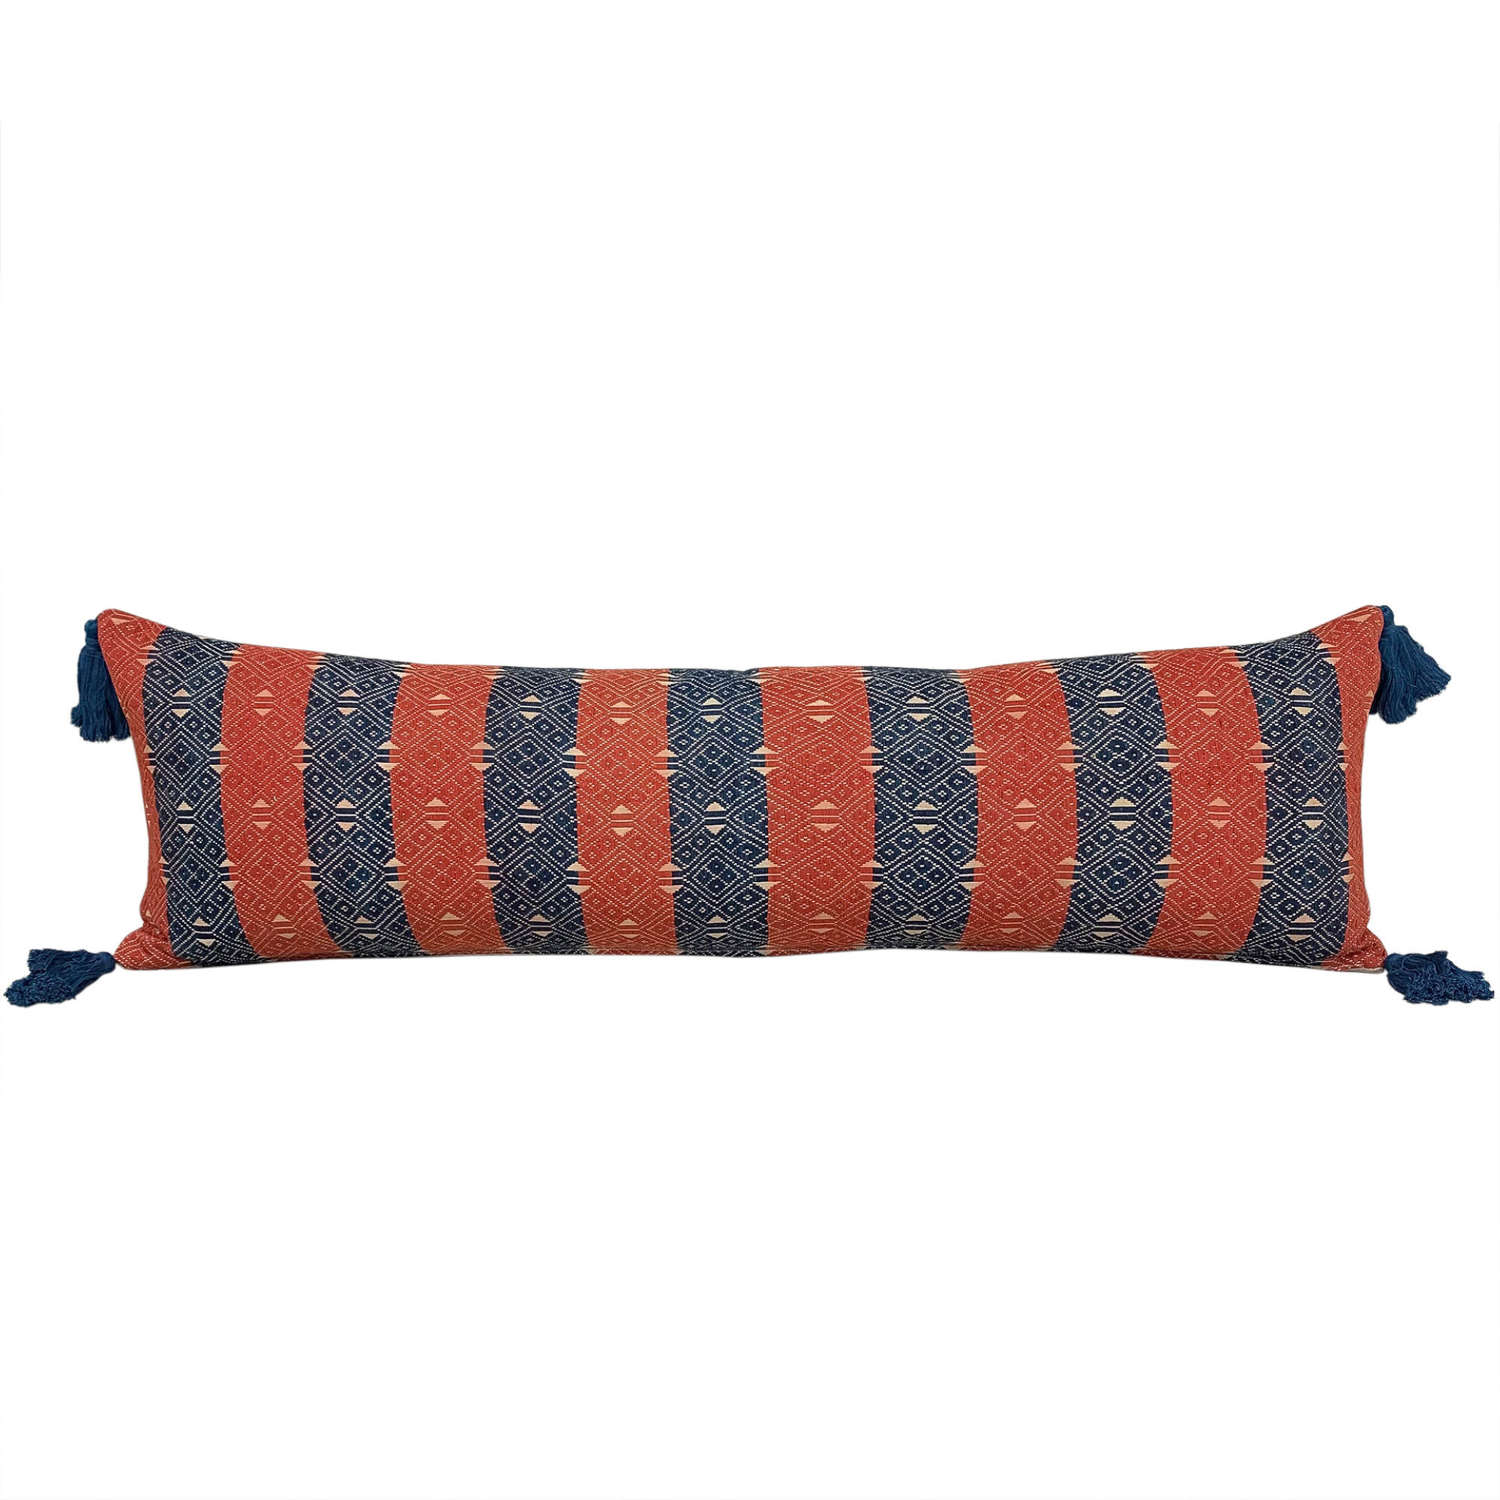 Long Dai cushion with tassels